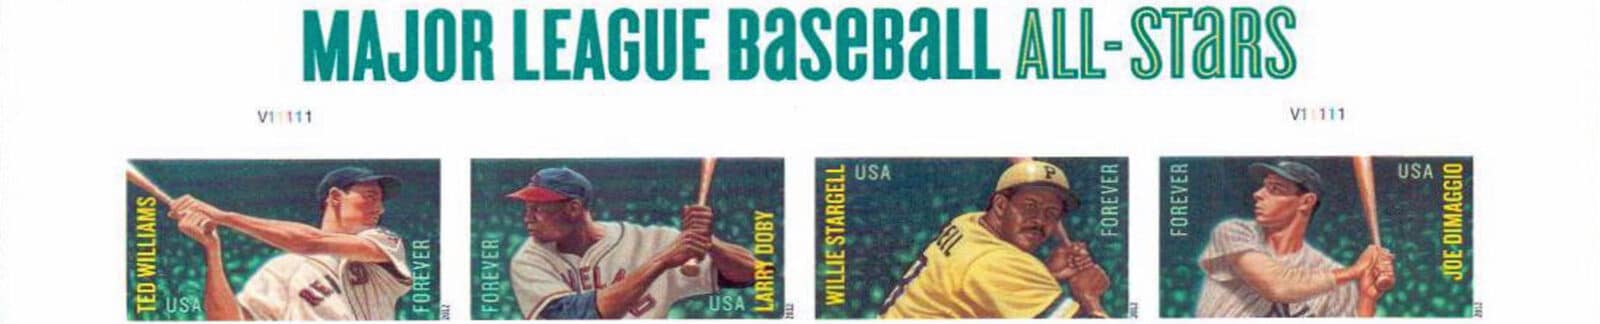 2012 Major League Baseball All-Stars U.S. Postage Stamps header